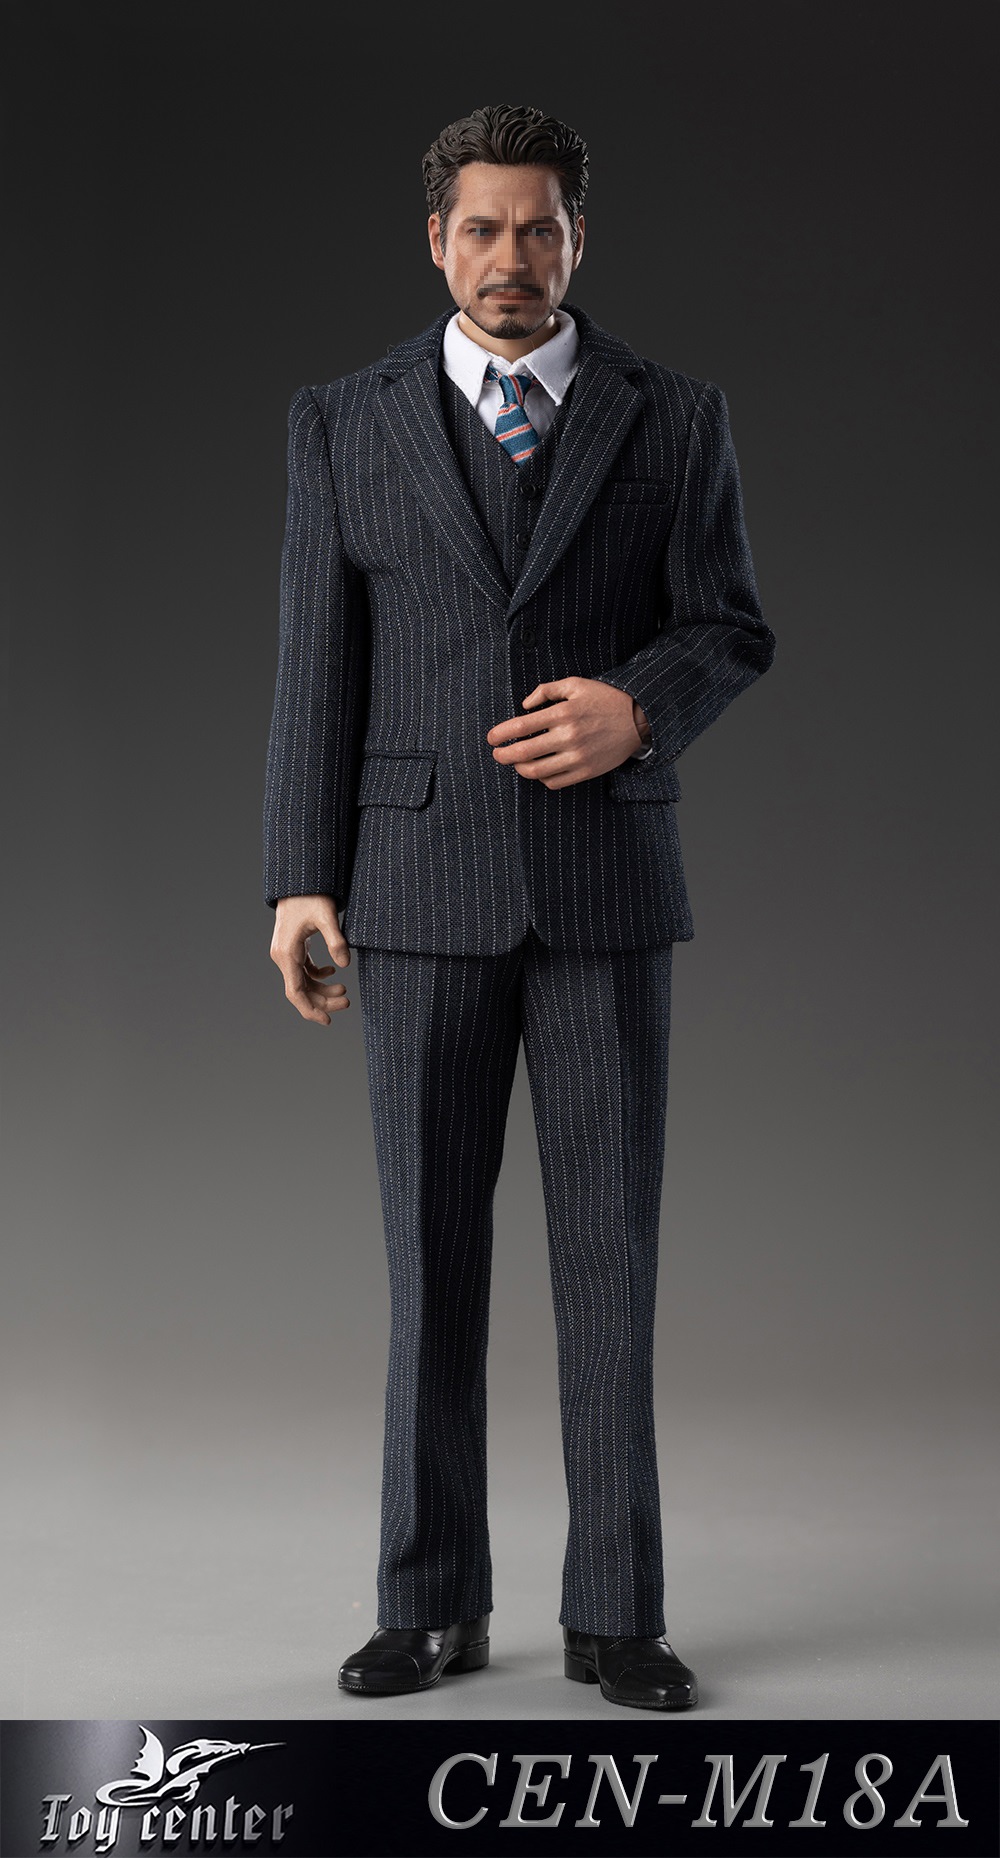 StripedSuit - NEW PRODUCT: Toy center: 1/6 British Gentleman Tony Striped Suit CEN-M18 Three Colors 15522712